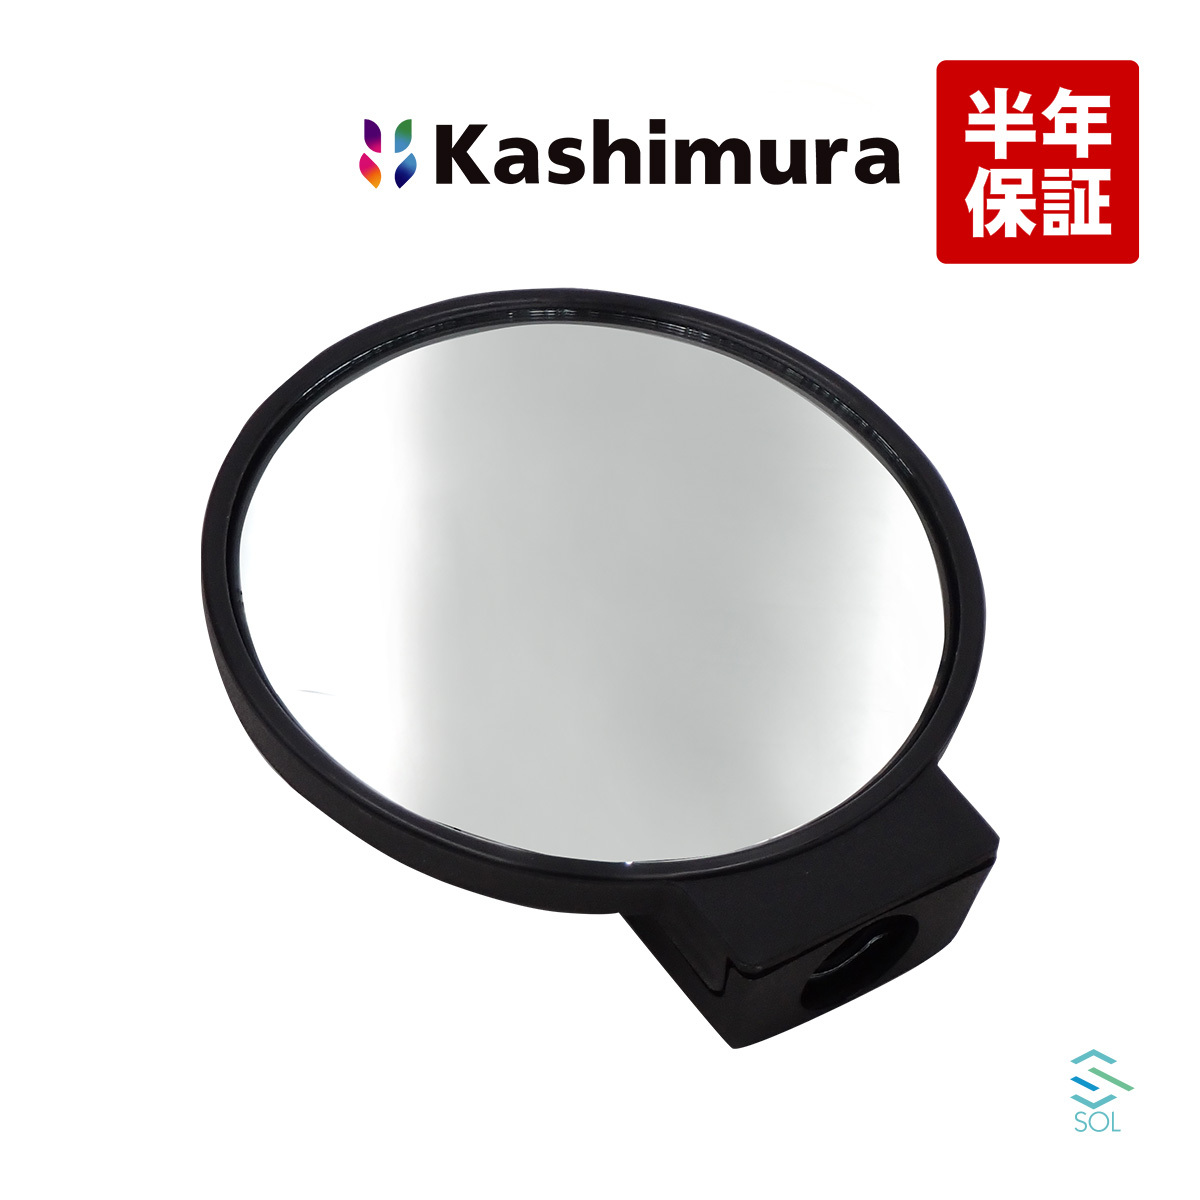  Kashimura genuine products Kashimura KU10752 under mirror Elf semi long Elf Semi-wide Elf turbo Elf dump NHR NHS NKS NKR NPR